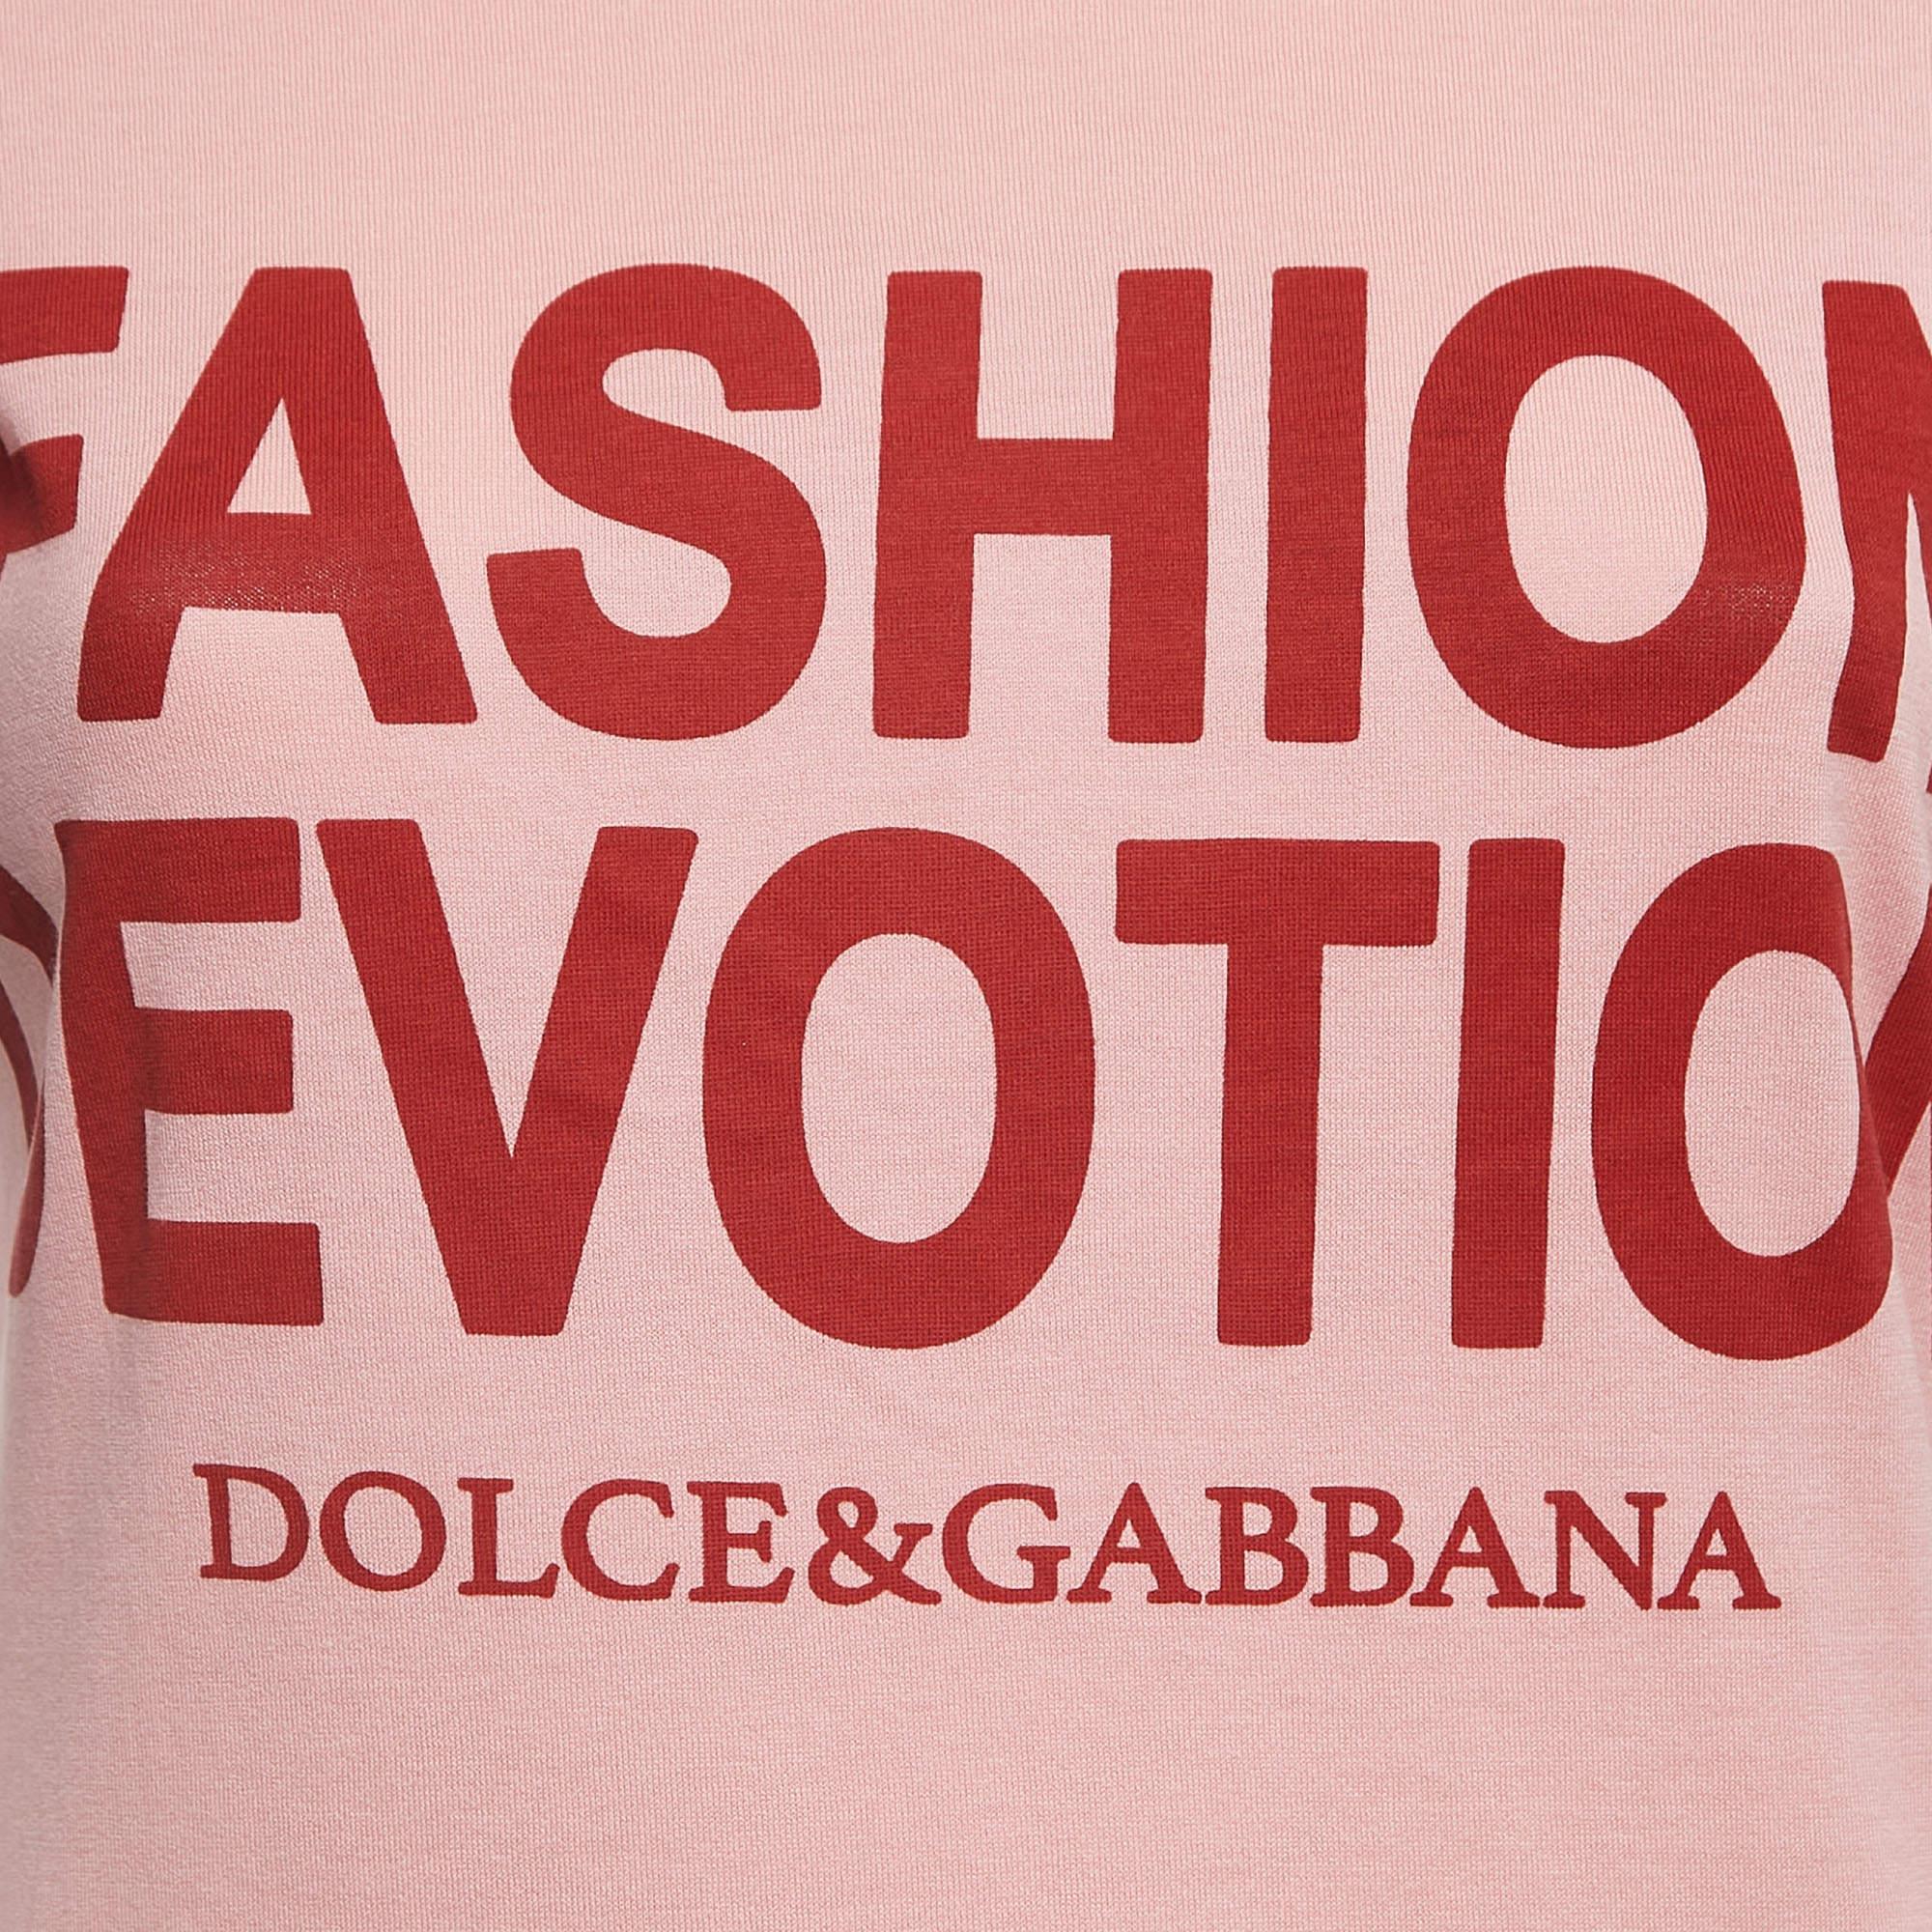 Dolce & Gabbana Pink Fashion Devotion Print Cotton T-Shirt XS In Good Condition For Sale In Dubai, Al Qouz 2